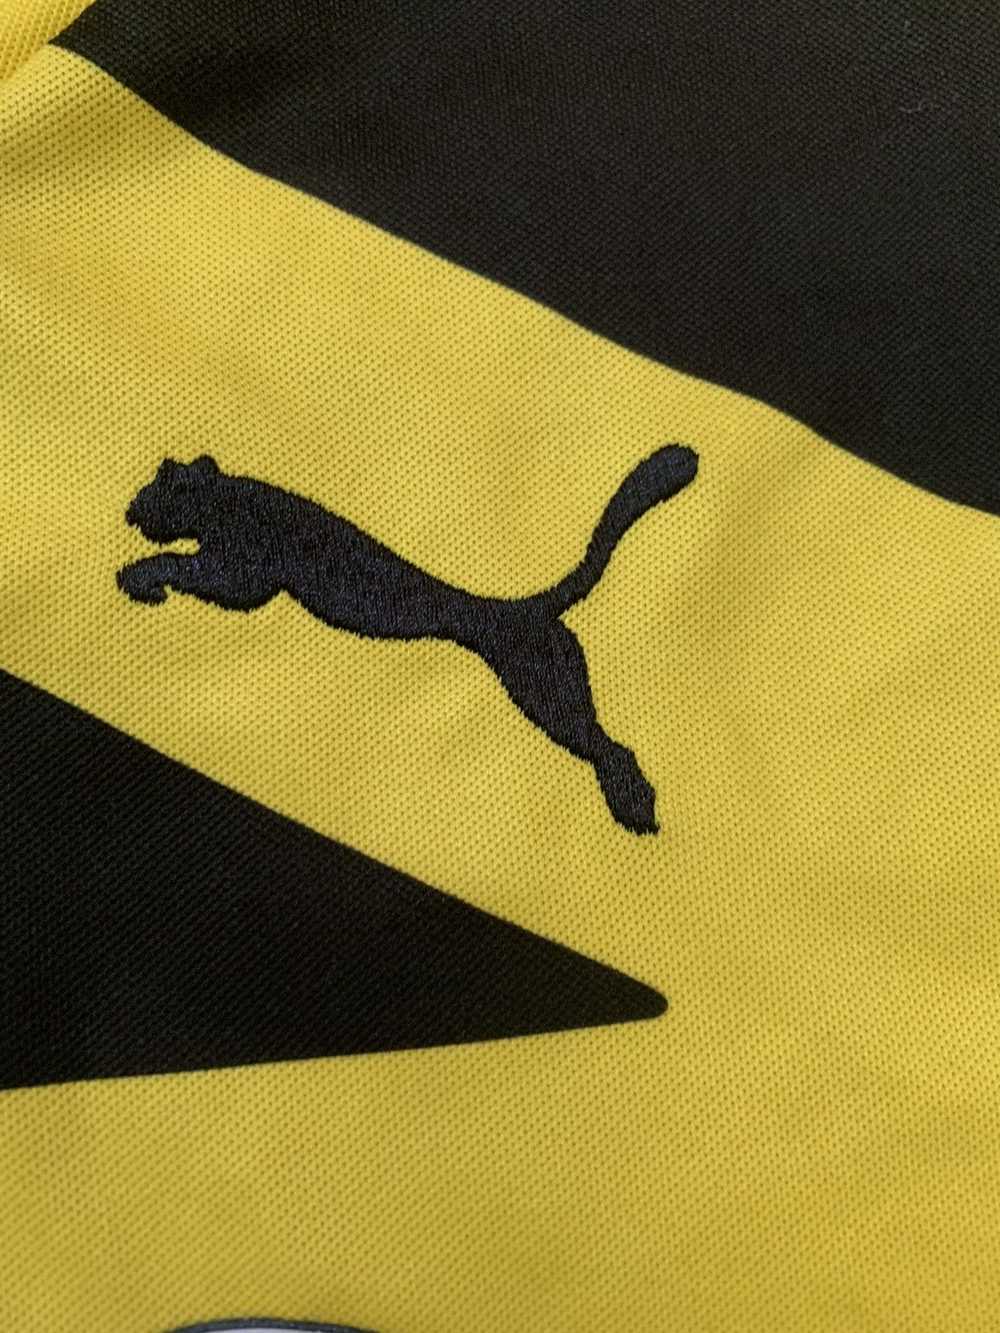 Puma × Soccer Jersey Puma Dortmund Jersey - image 2